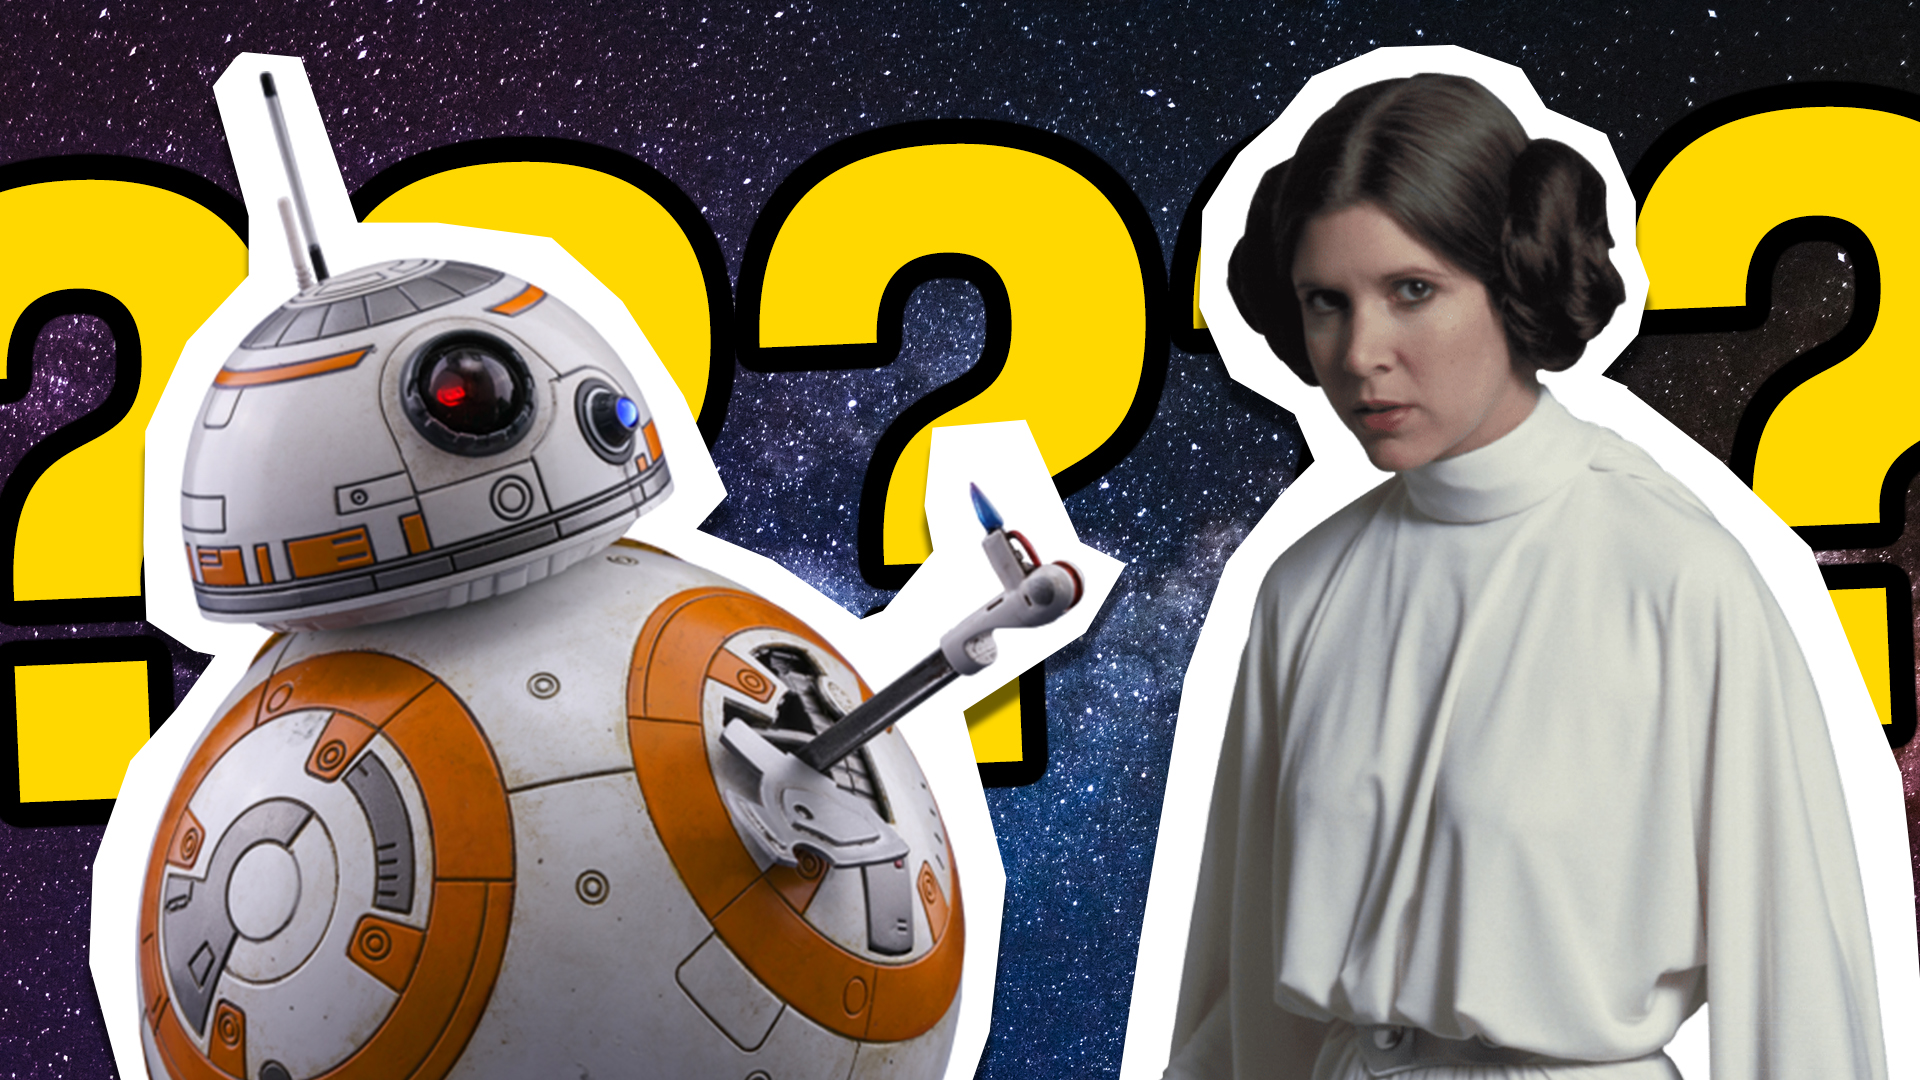 Star Wars' BB-8 and Princess Leia